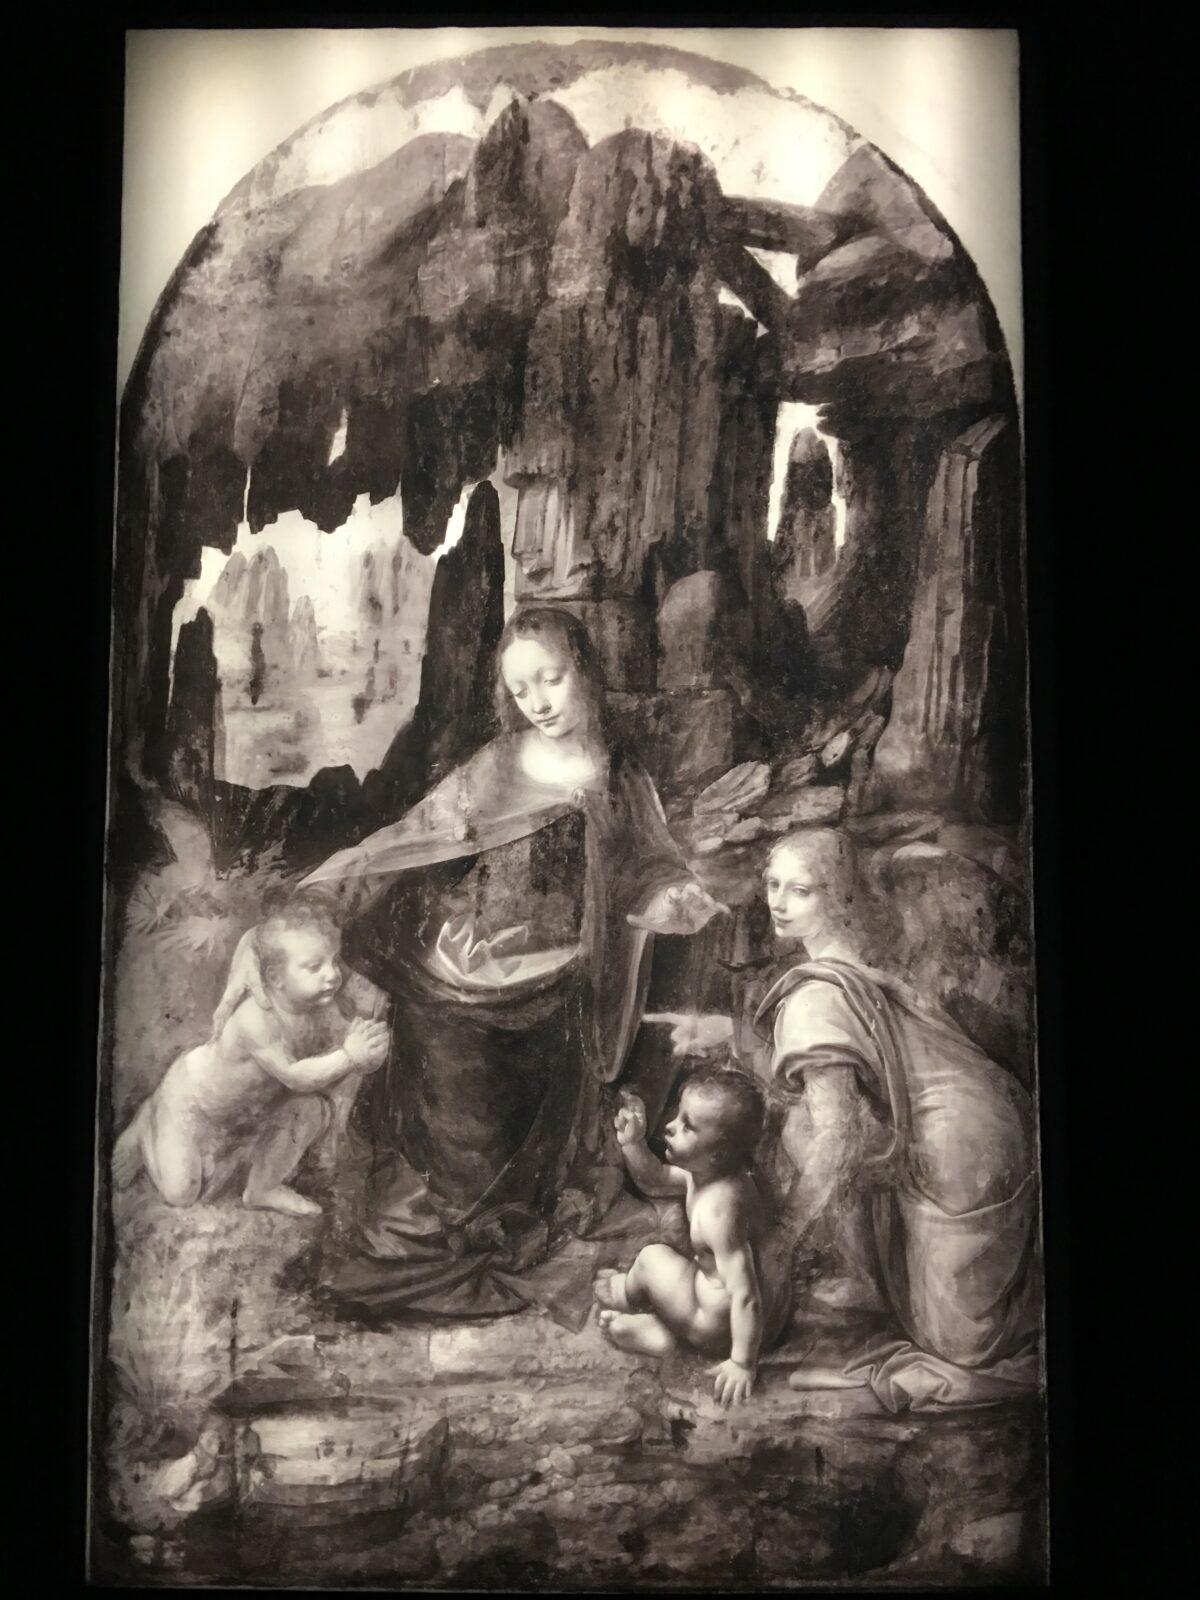 Infrared reflectography of the “Virgin of the Rocks” (Paris version). ) C2RMF/Elsa Lambert. (David Vives/The Epoch Times)